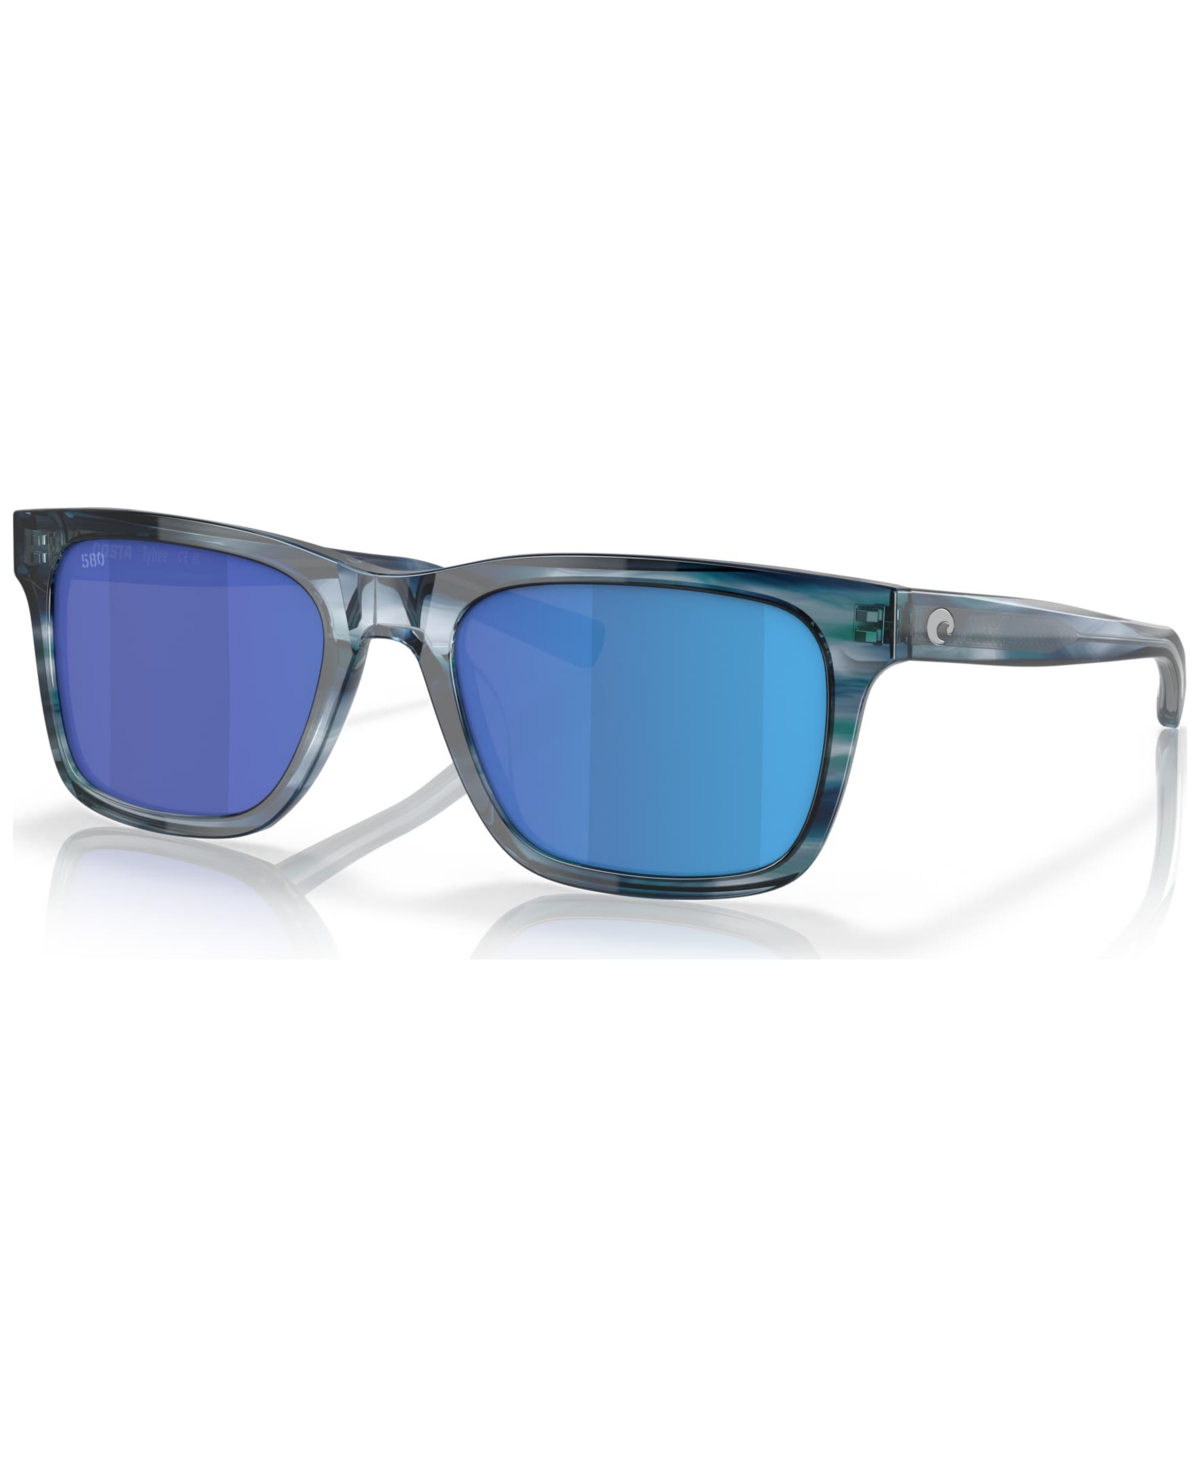 Men's Polarized Sunglasses, Tybee - Ocean Currents